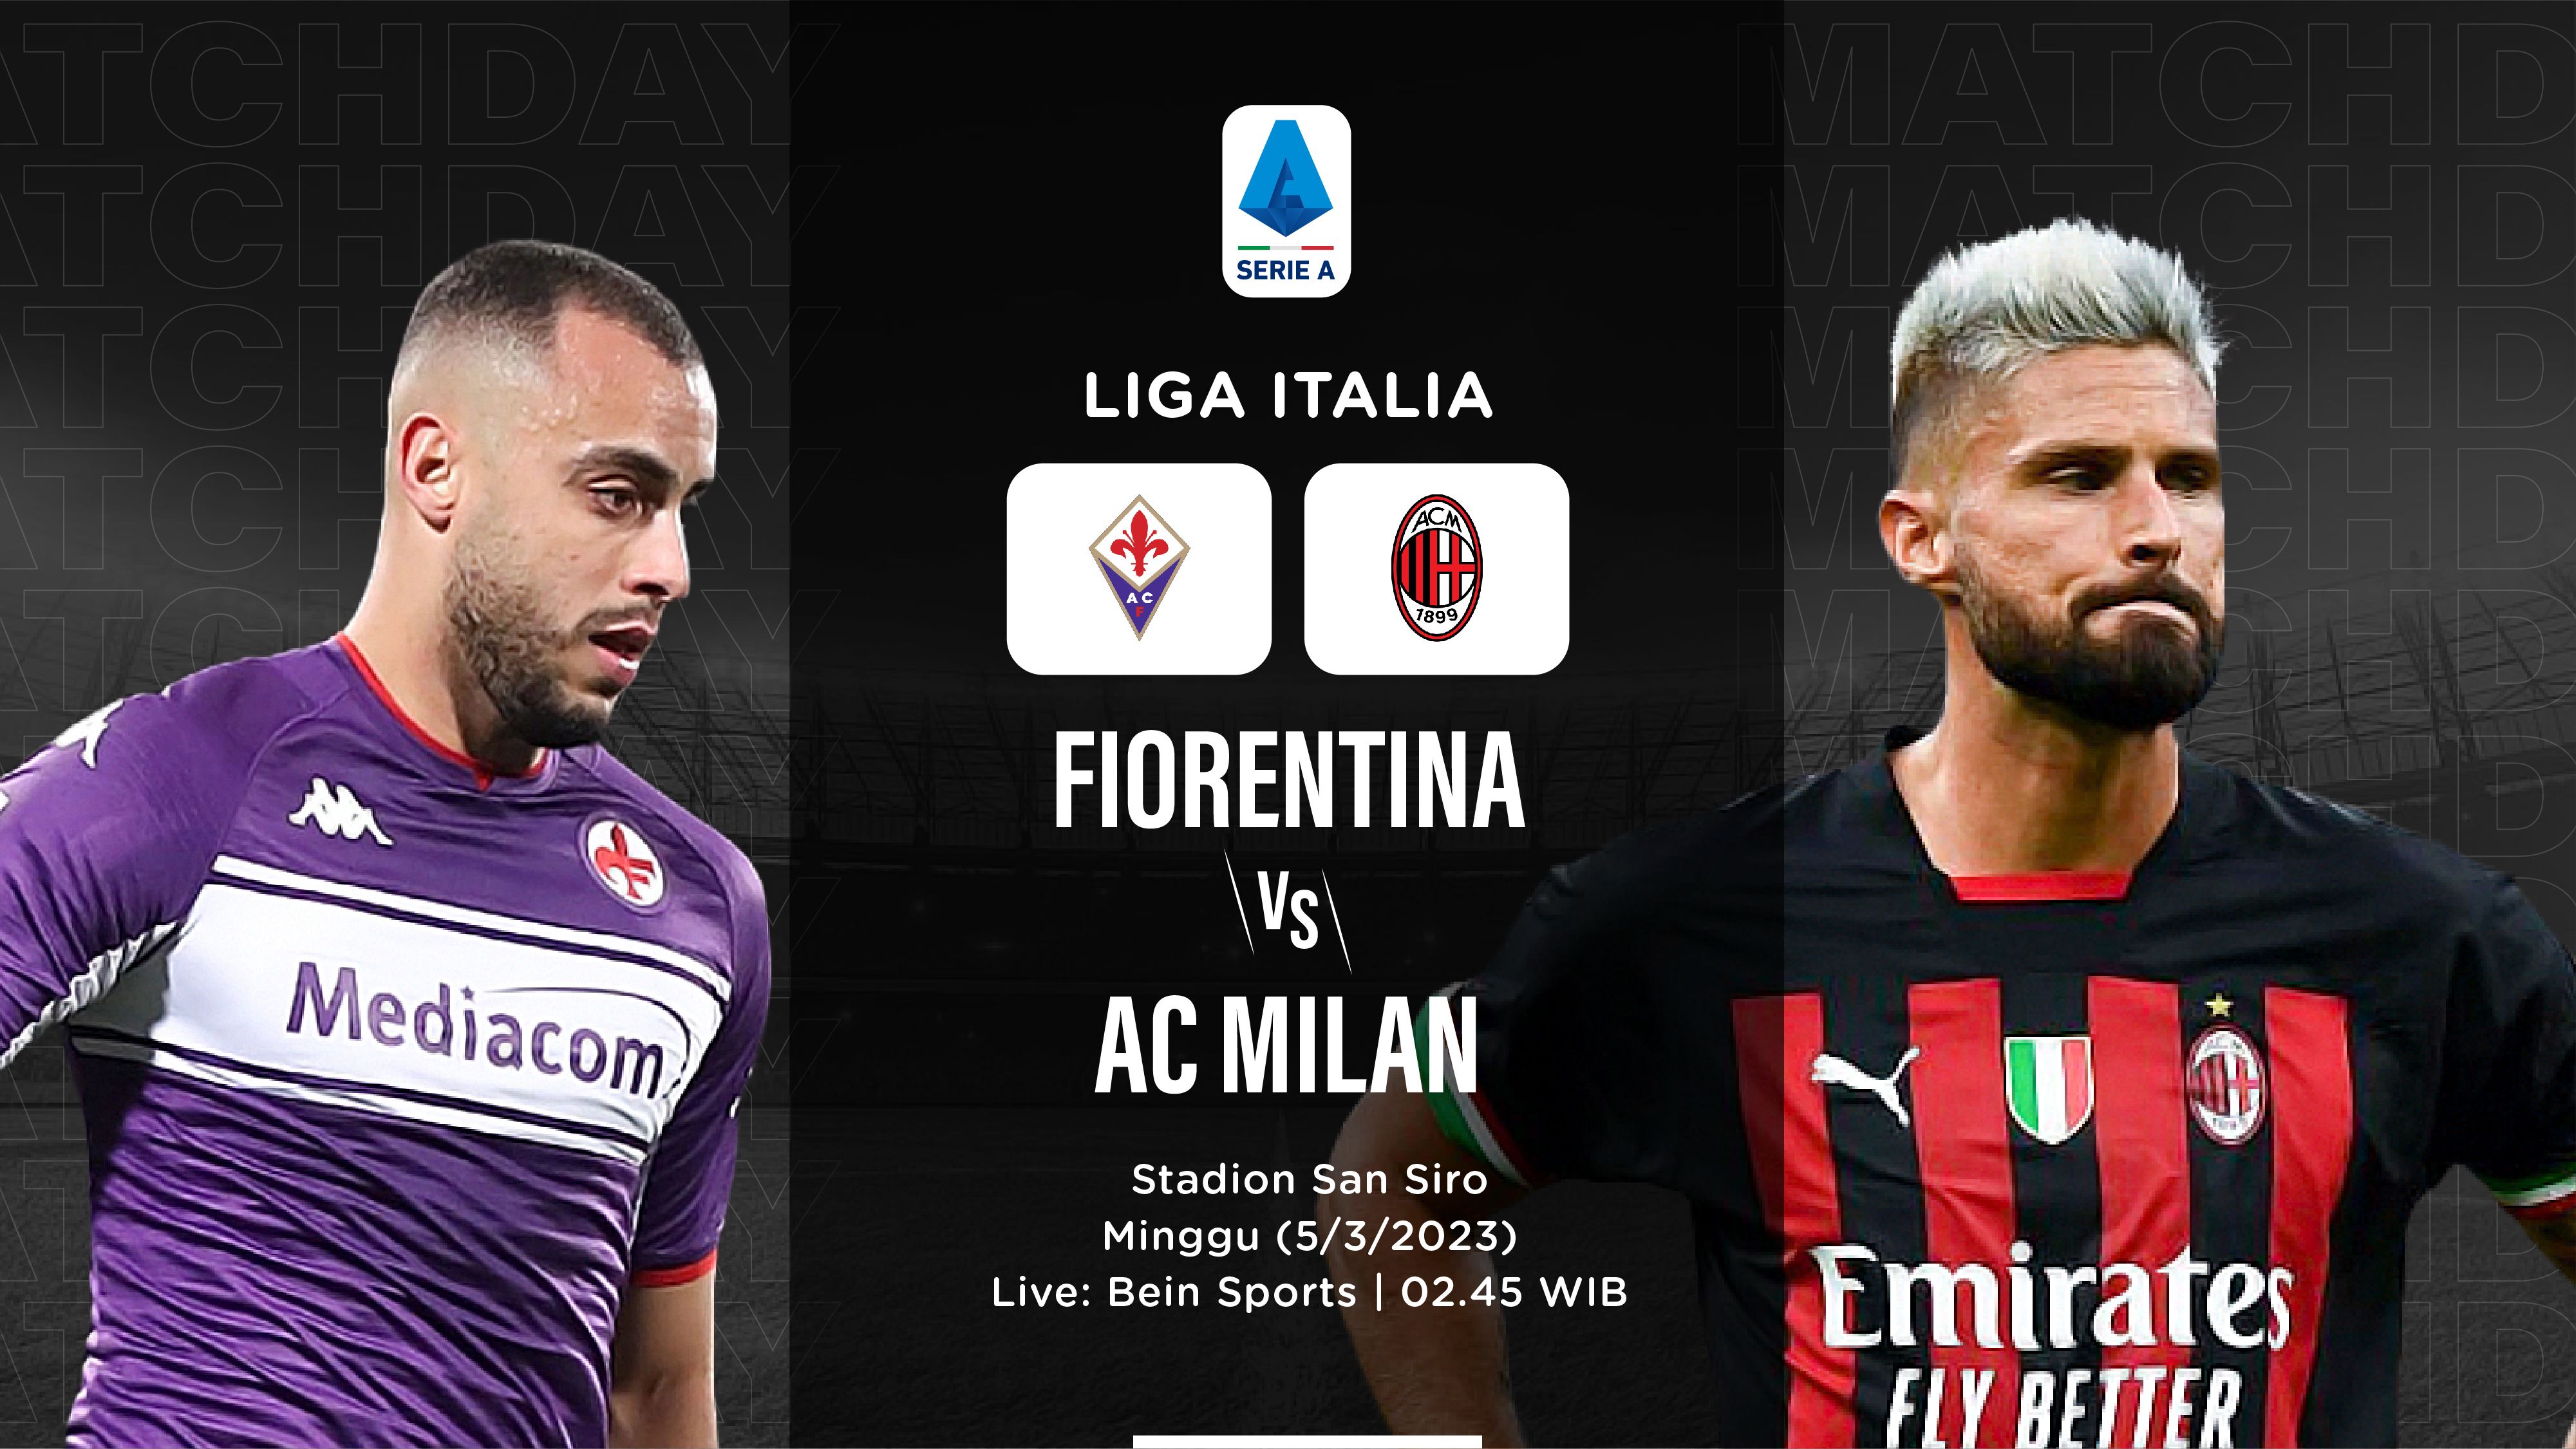 Cover pertandingan Fiorentina vs AC Milan di Liga Italia 2022-2023 (Hendy/Skor.id)